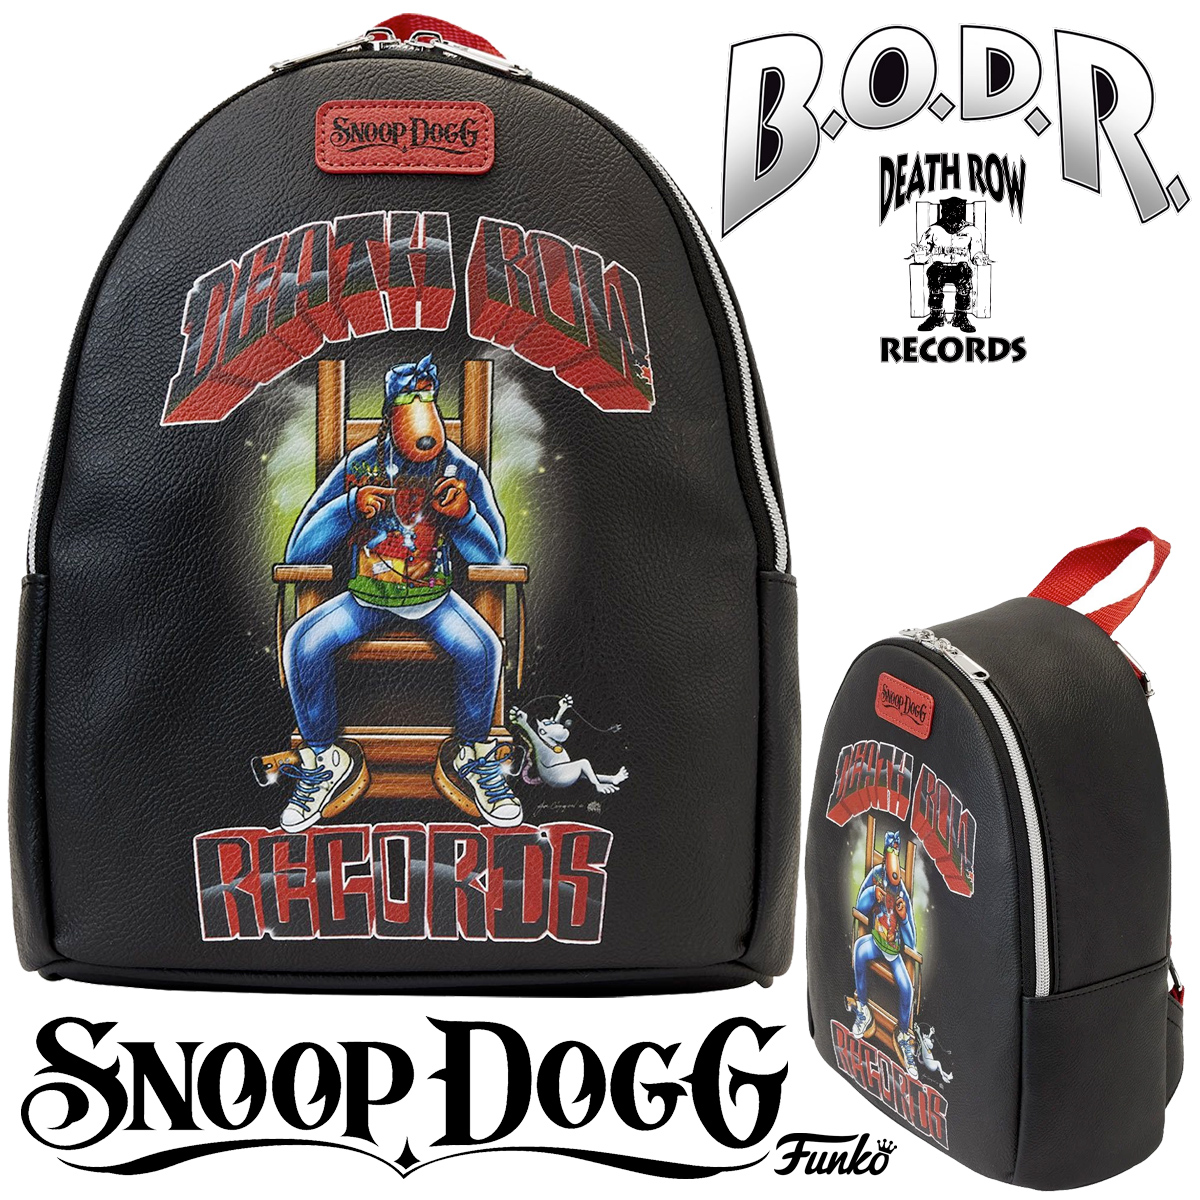 Mini-Mochila Snoop Dogg B.O.D.R. Death Row Records